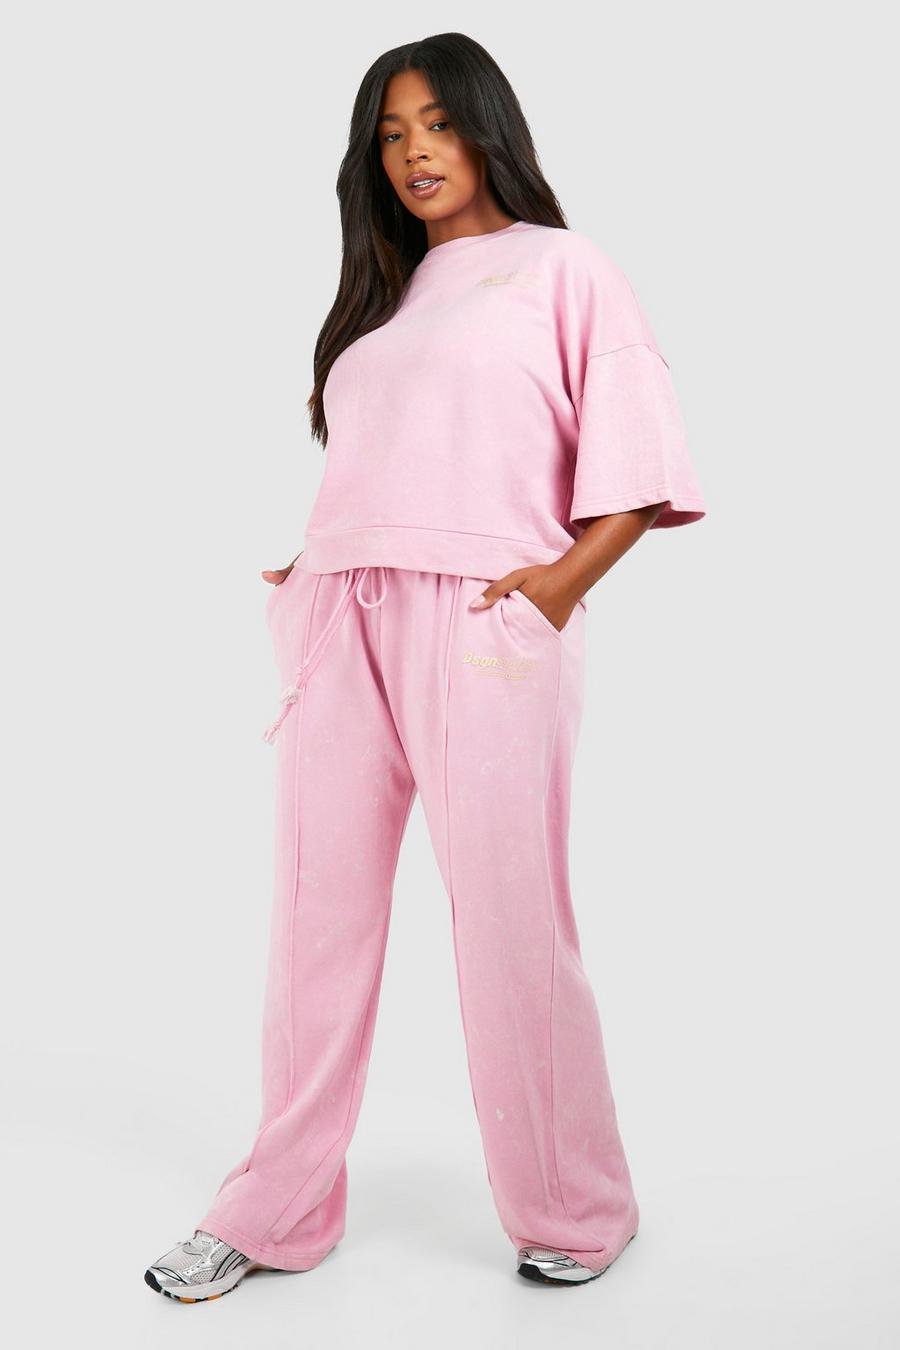 Pantaloni tuta Plus Size dritti slavati Dsgn Studio, Pink